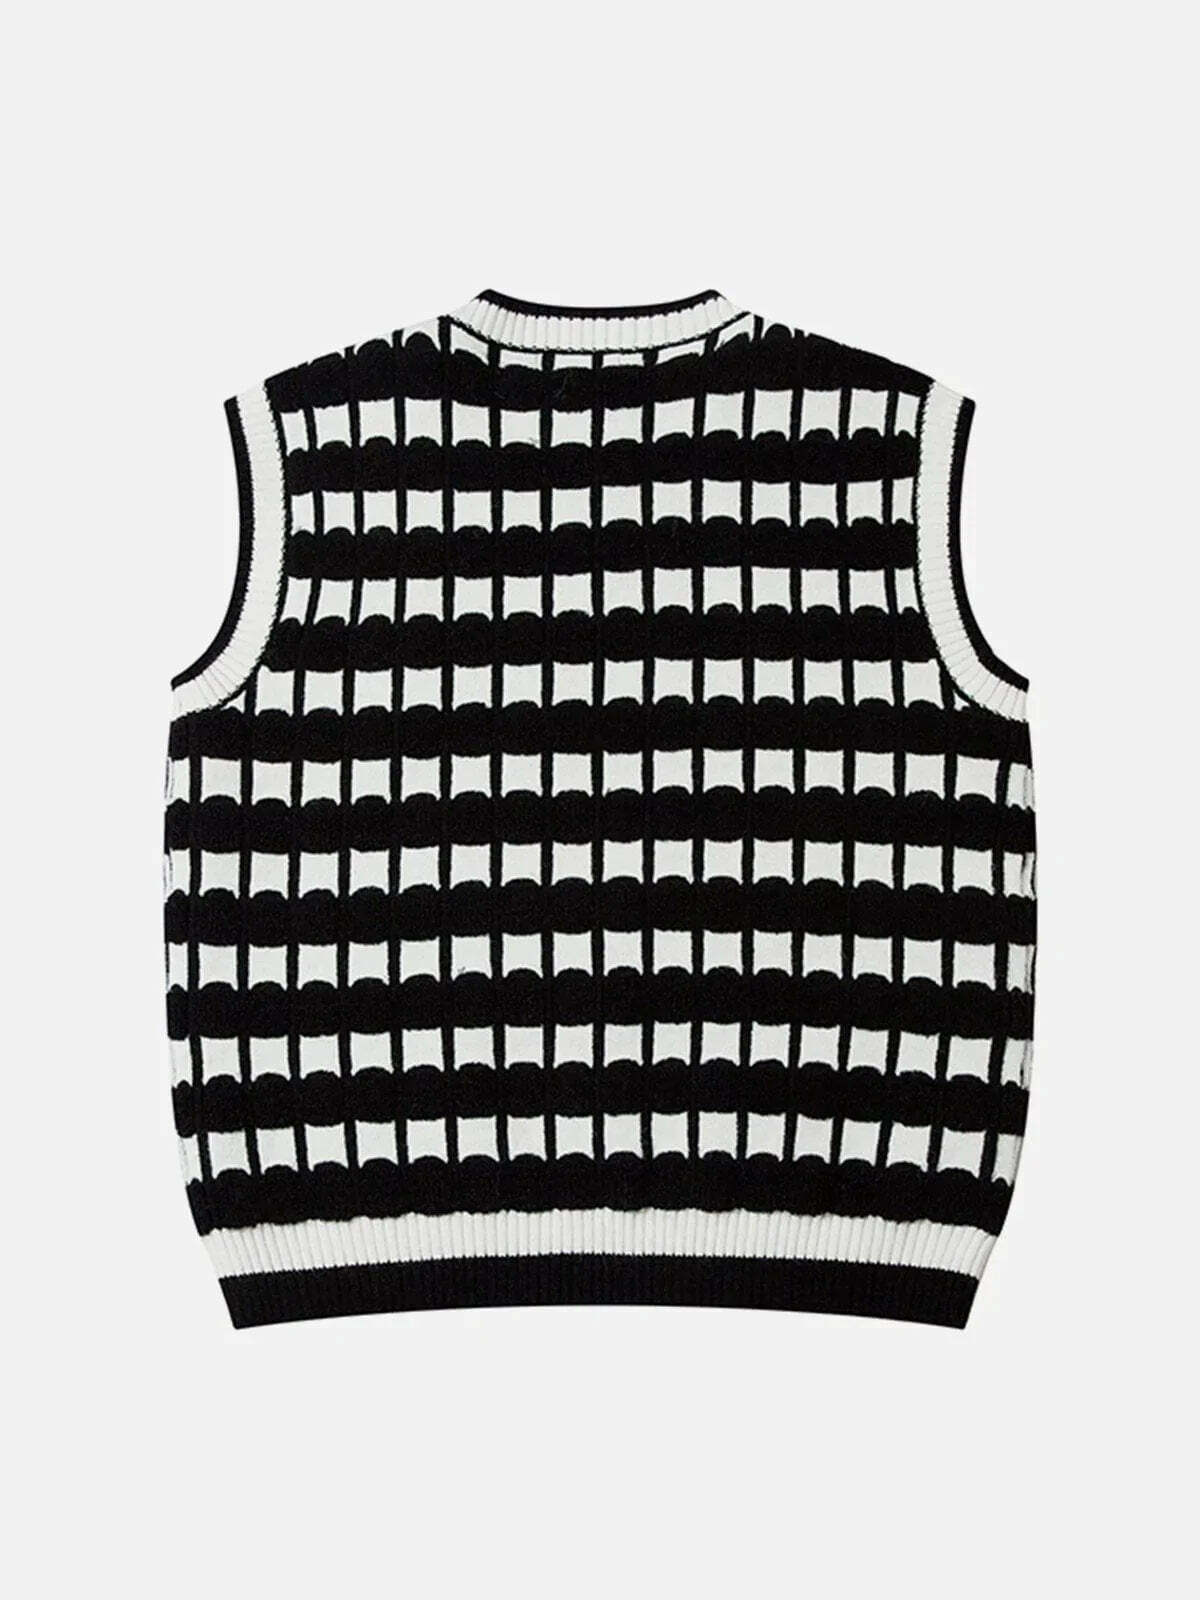 plaid striped sweater vest edgy retro streetwear essential 7056